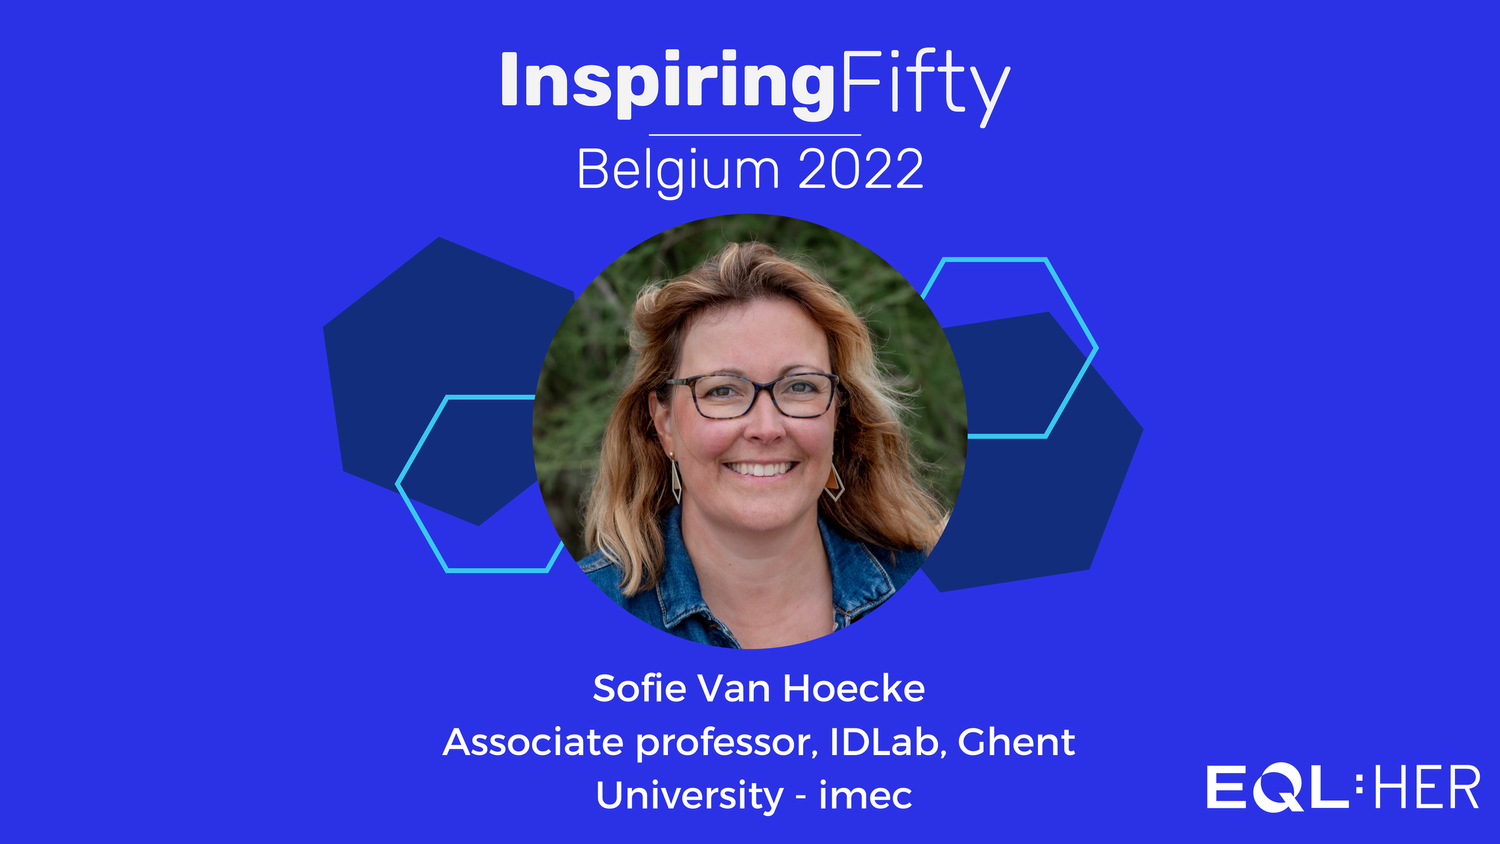 Sofie Van Hoecke one of the InspiringFifty Belgium 2022